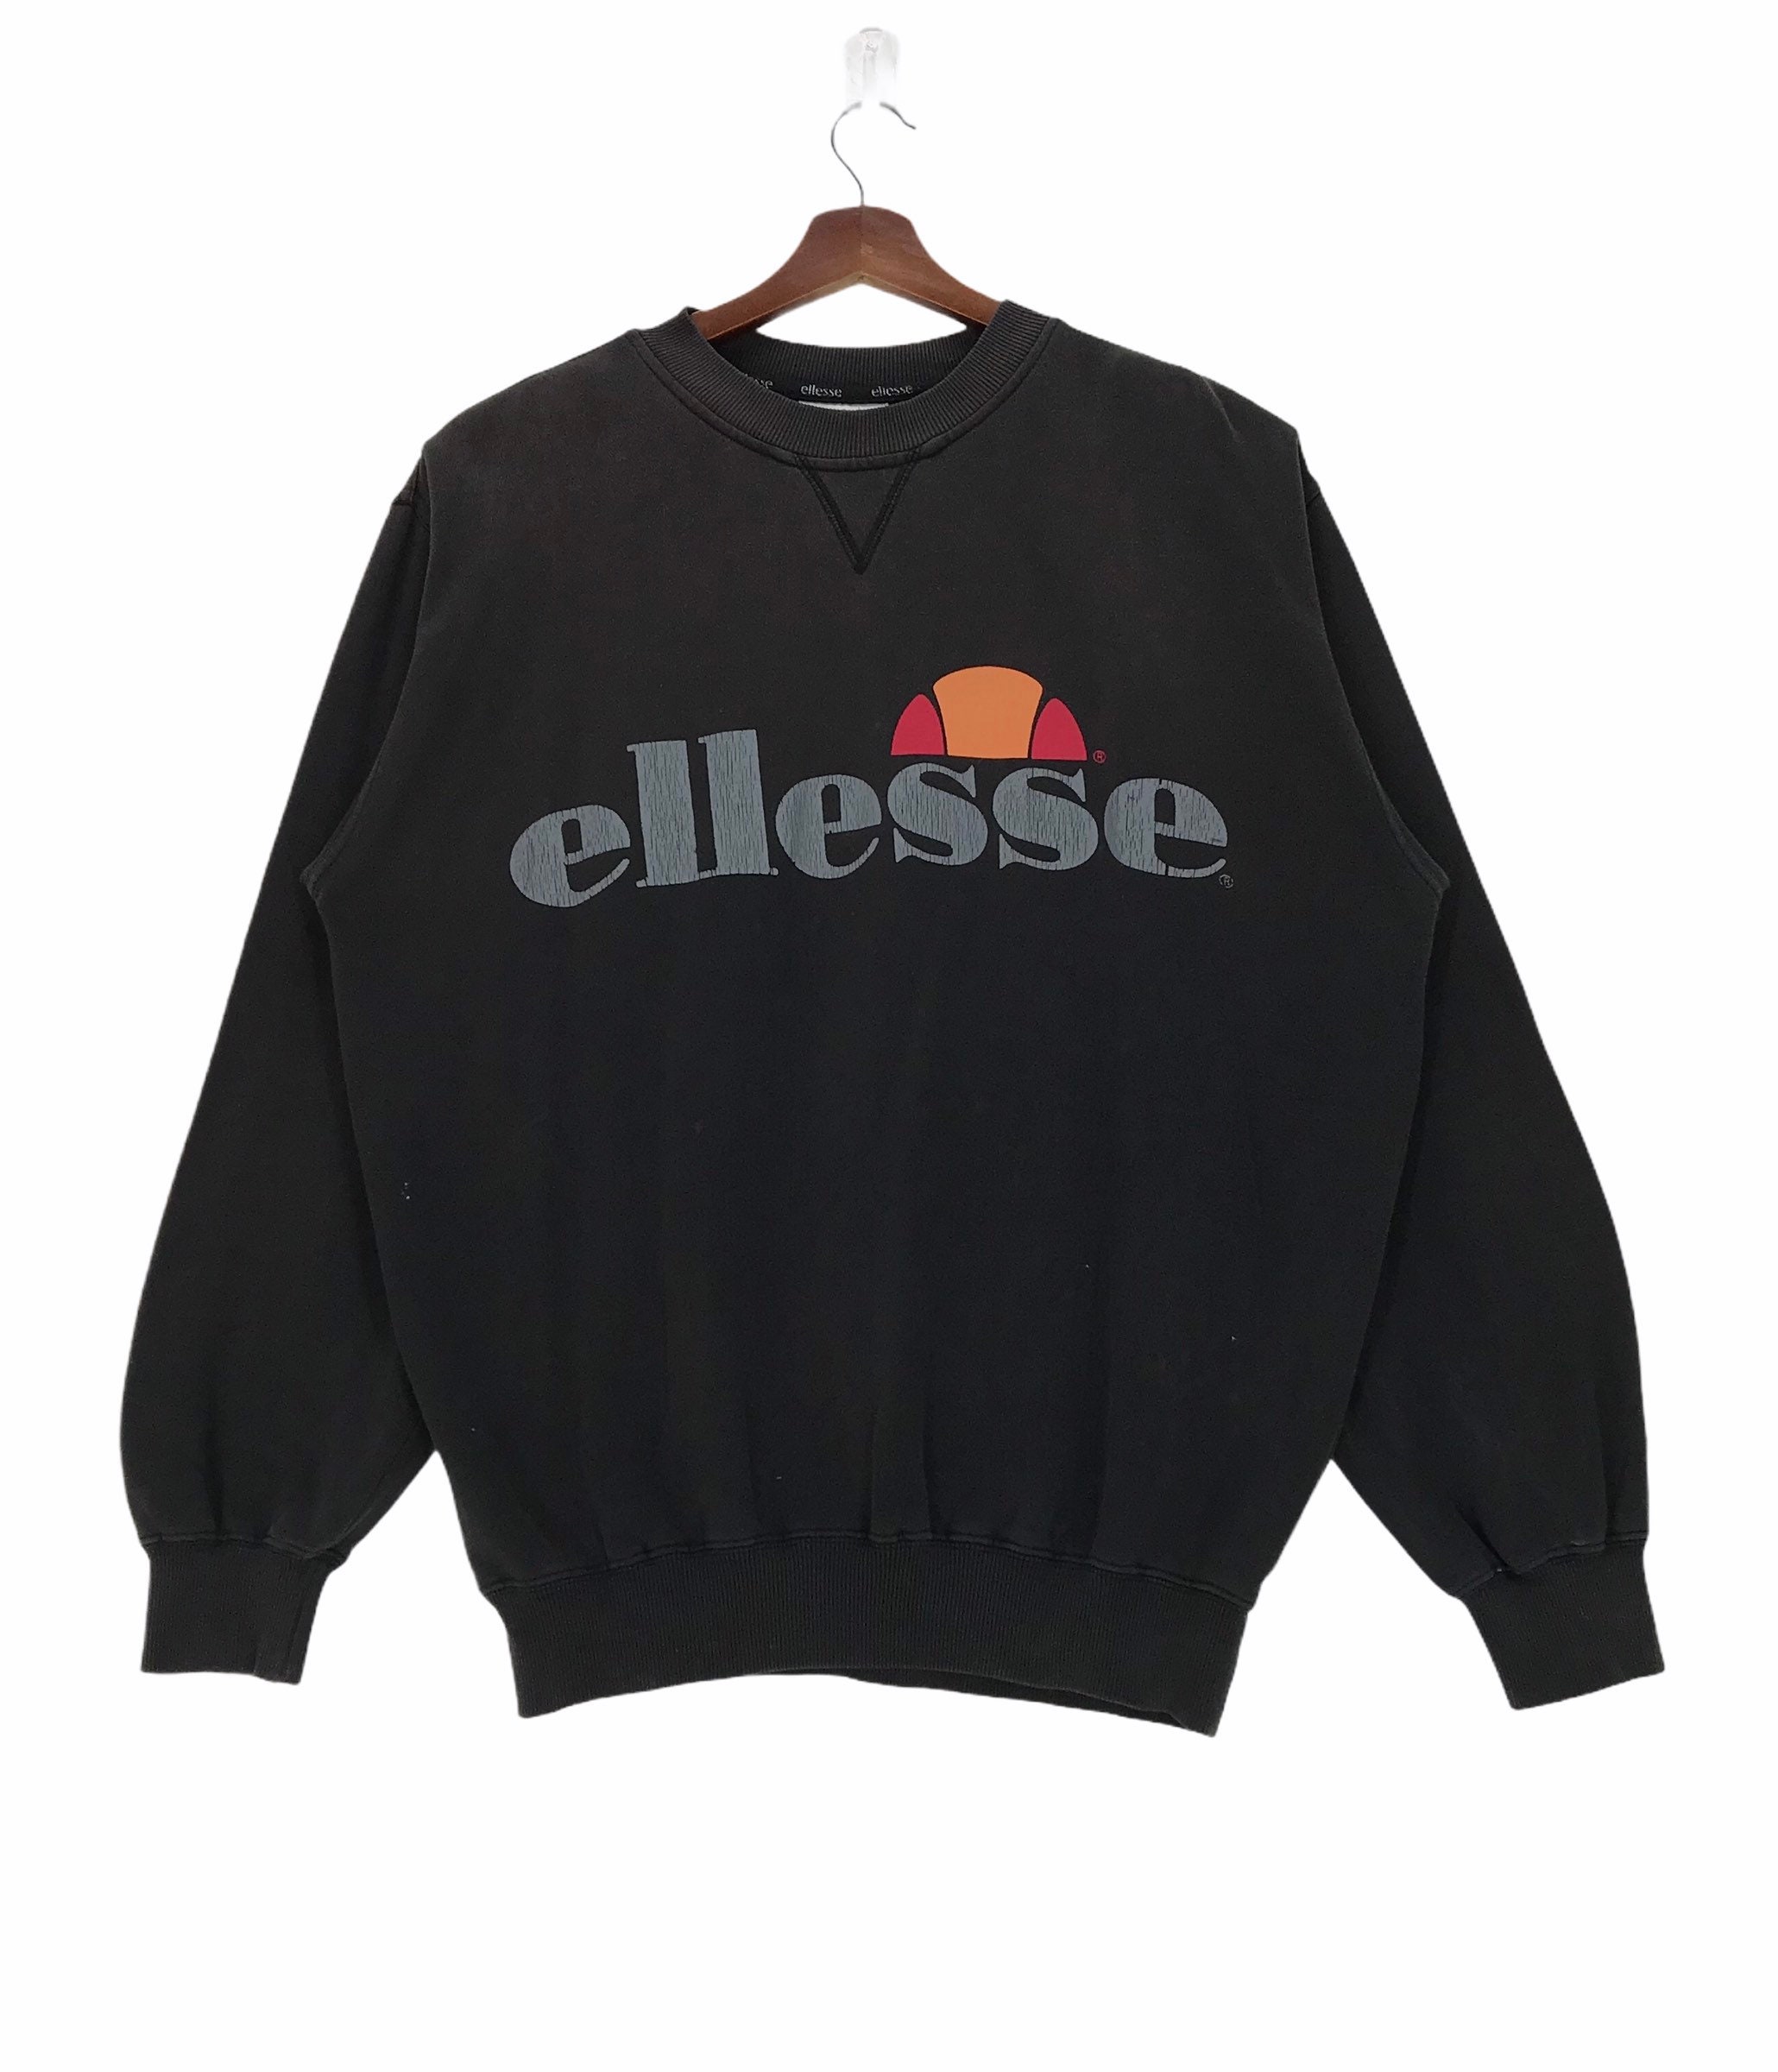 Vintage Ellesse Italian Sport Apparel Company Sweatshirt | Etsy